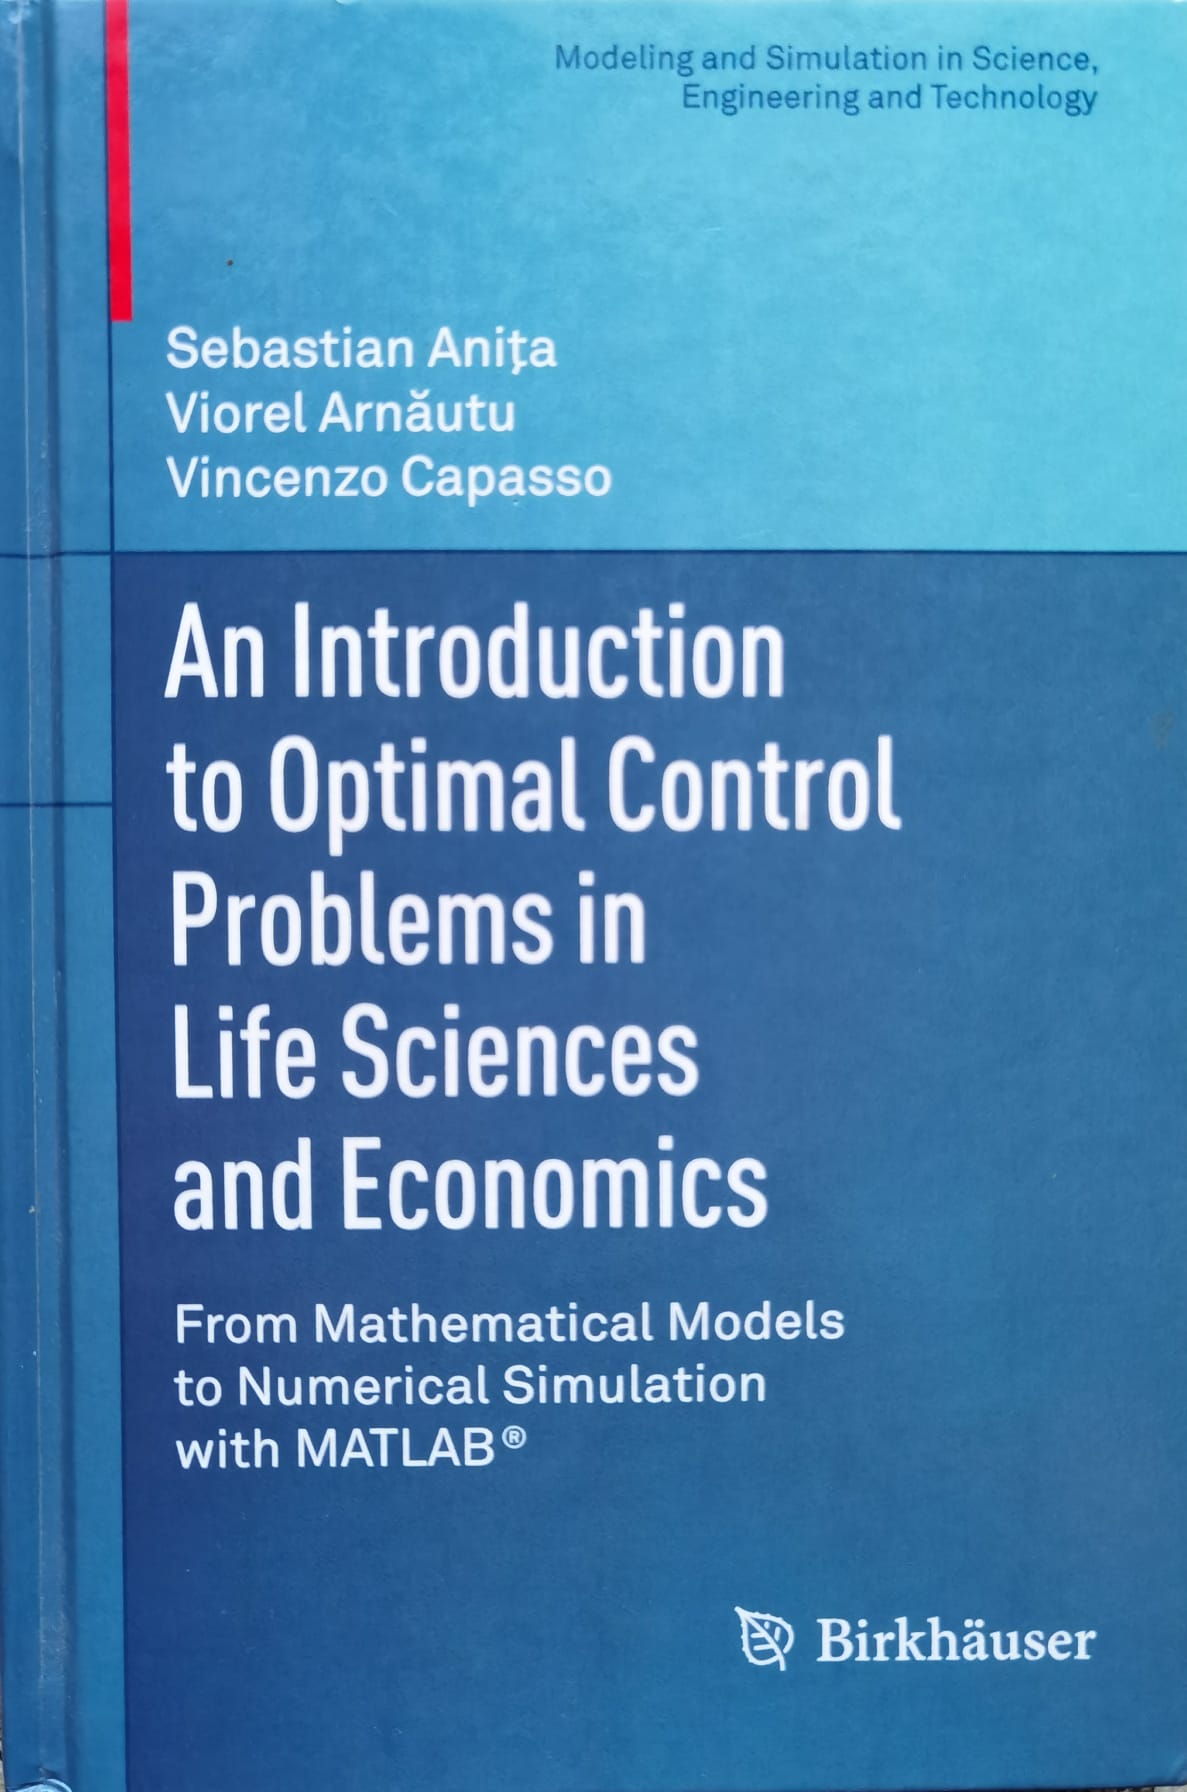 an introduction to optimal control in life sciences and economics                                    sebastian anita , viorel arnautu, vincenzo capasso                                                  